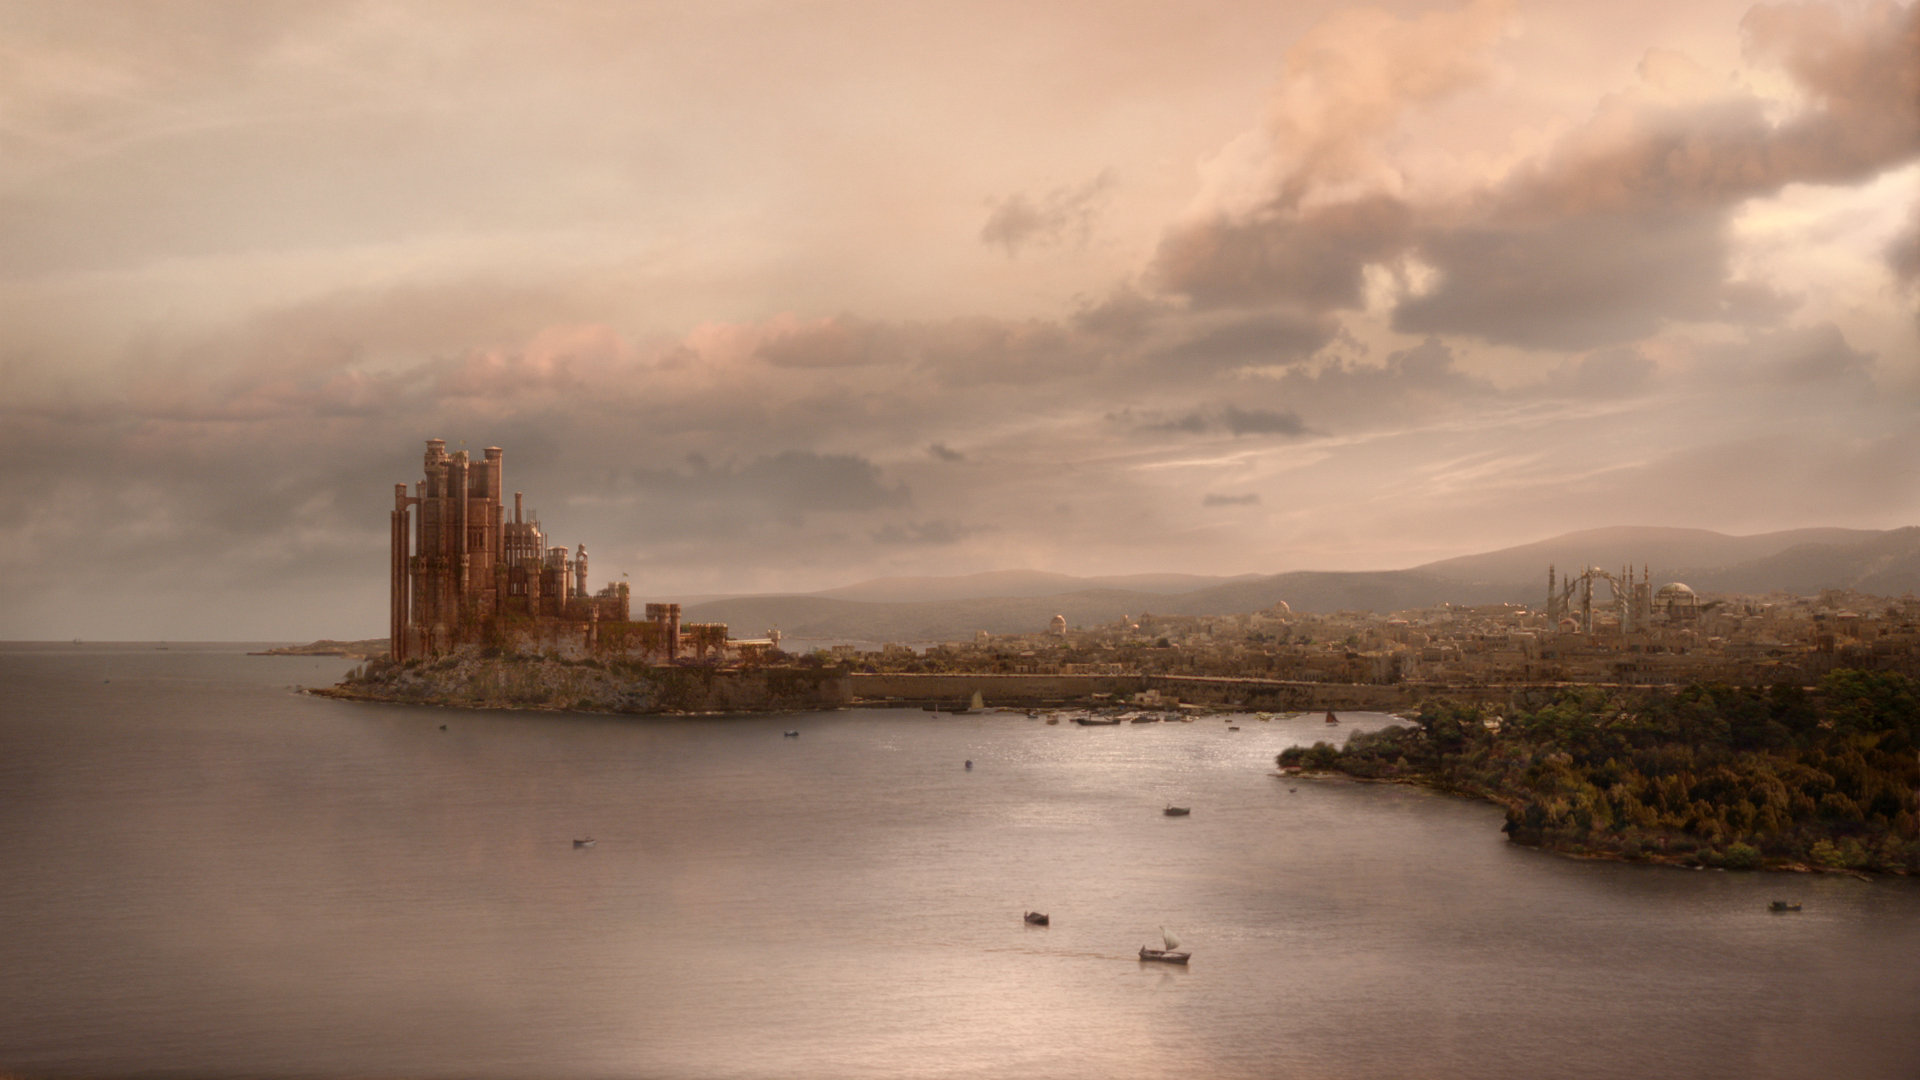 Game Of Thrones wallpaper 1920x1080 Full HD (1080p) desktop background